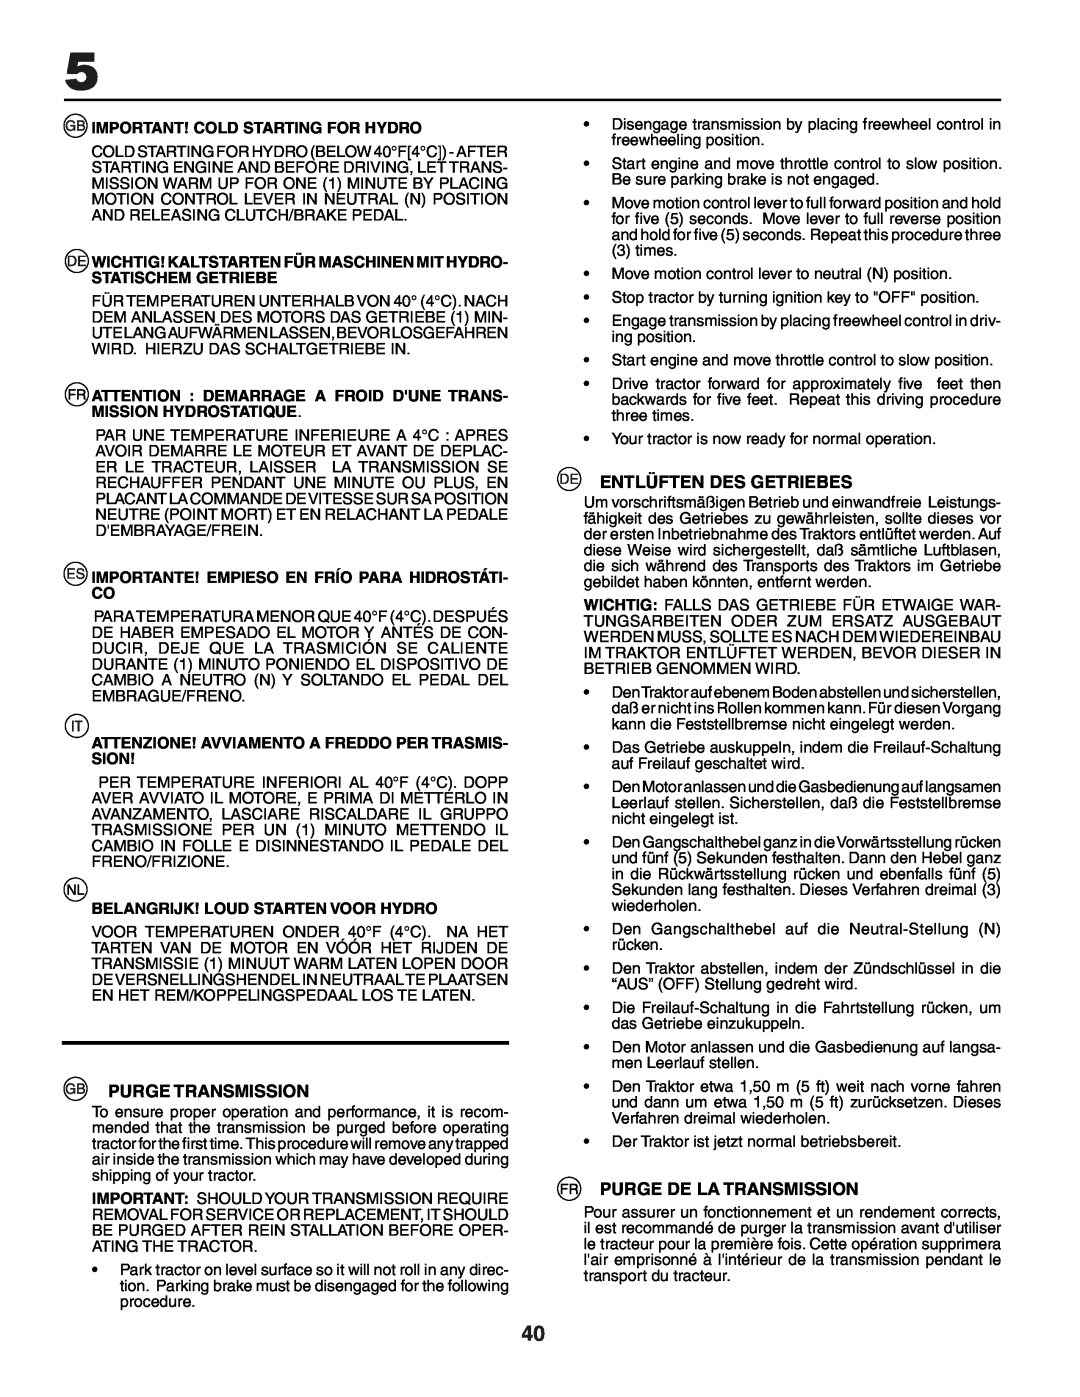 Husqvarna YTH150XP instruction manual Purge Transmission, Entlüften Des Getriebes, Purge De La Transmission 